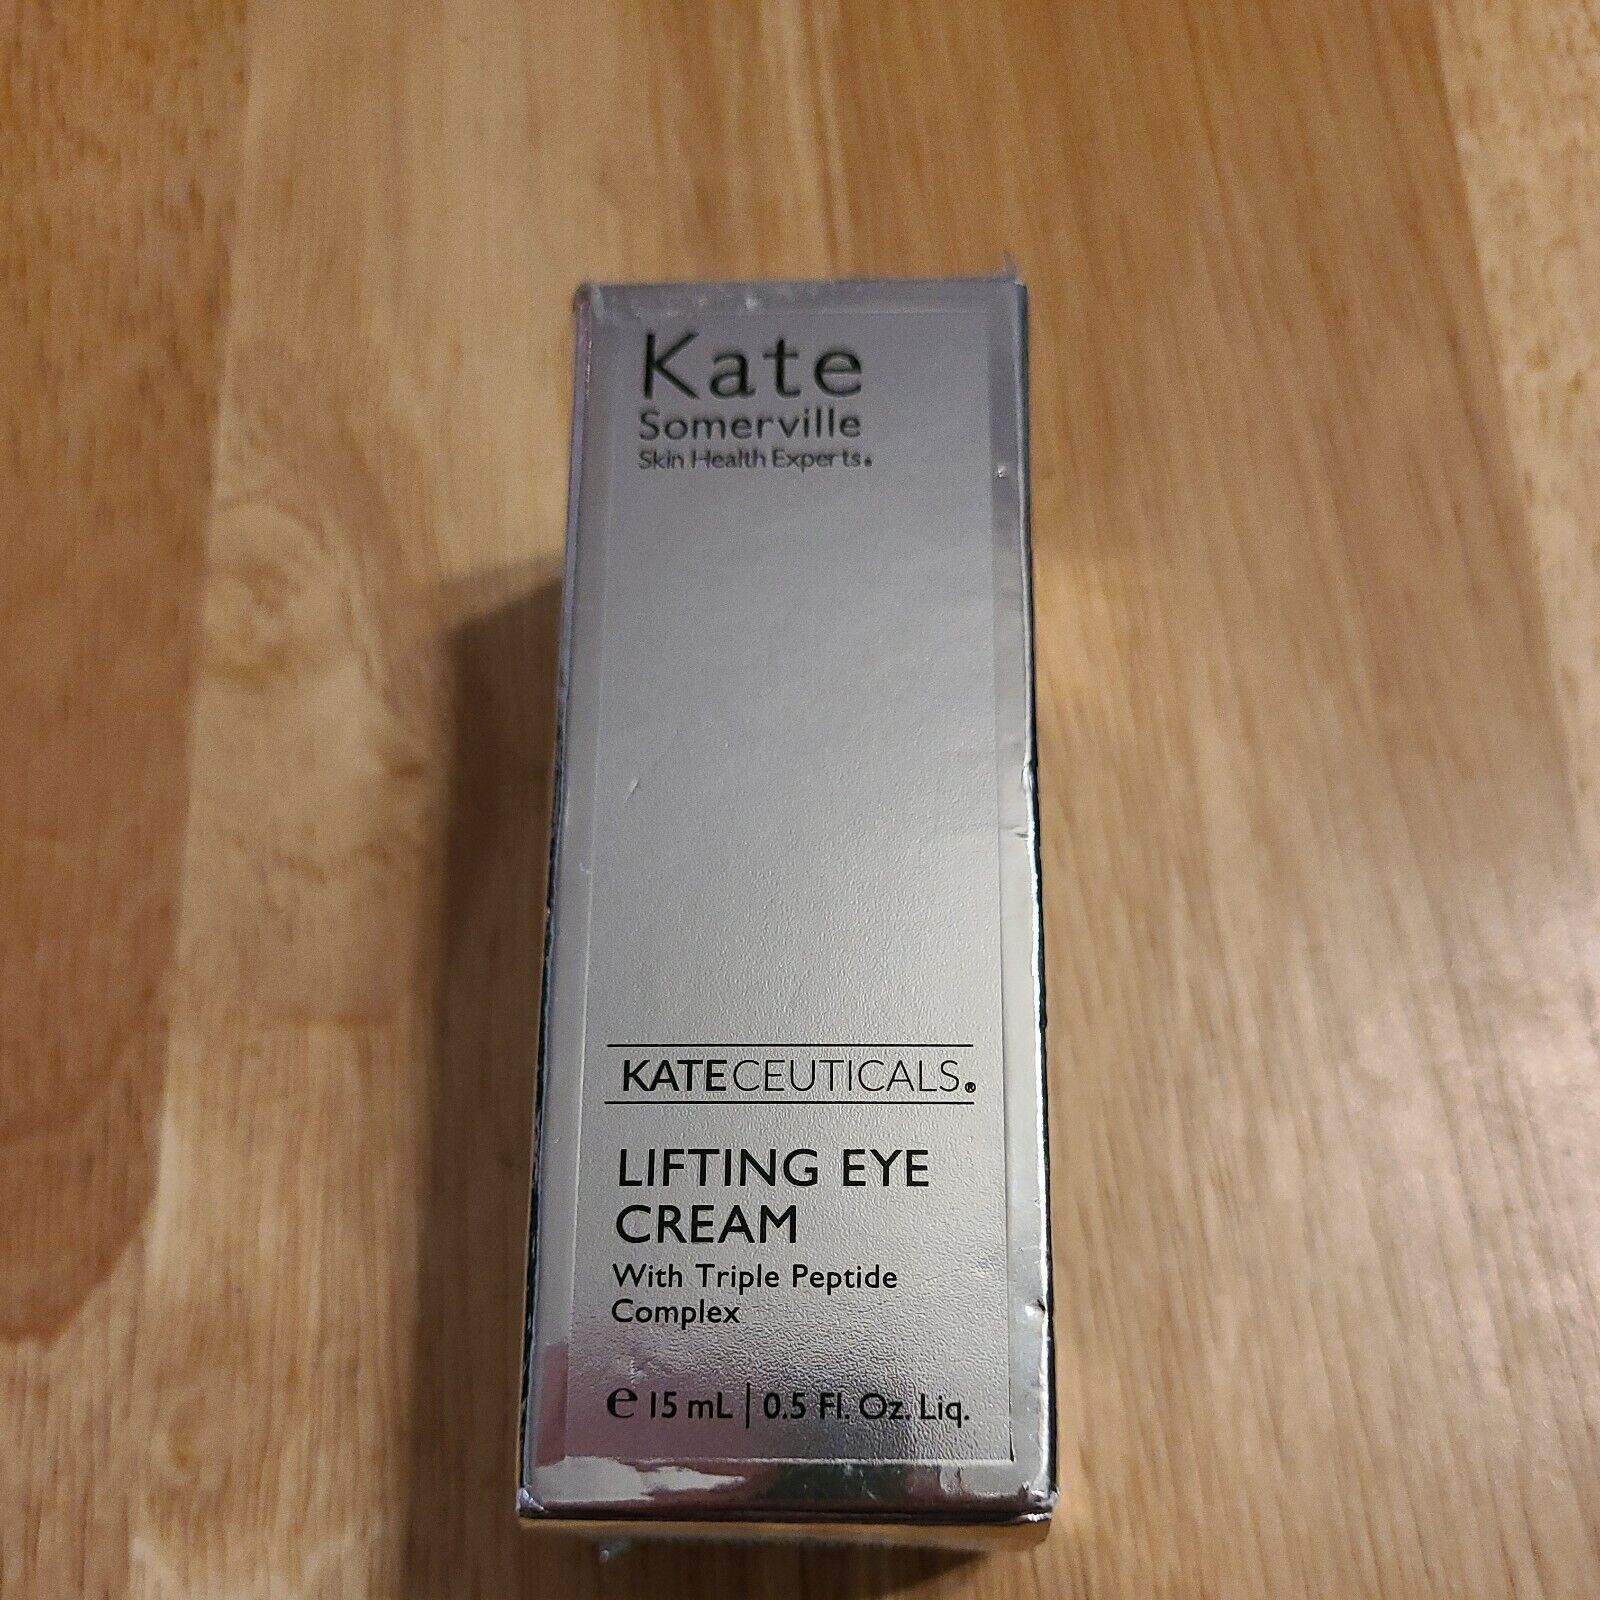 Kate Award Somerville KateCeuticals Lifting Eye oz Cream 0.5 15ml fl Courier shipping free